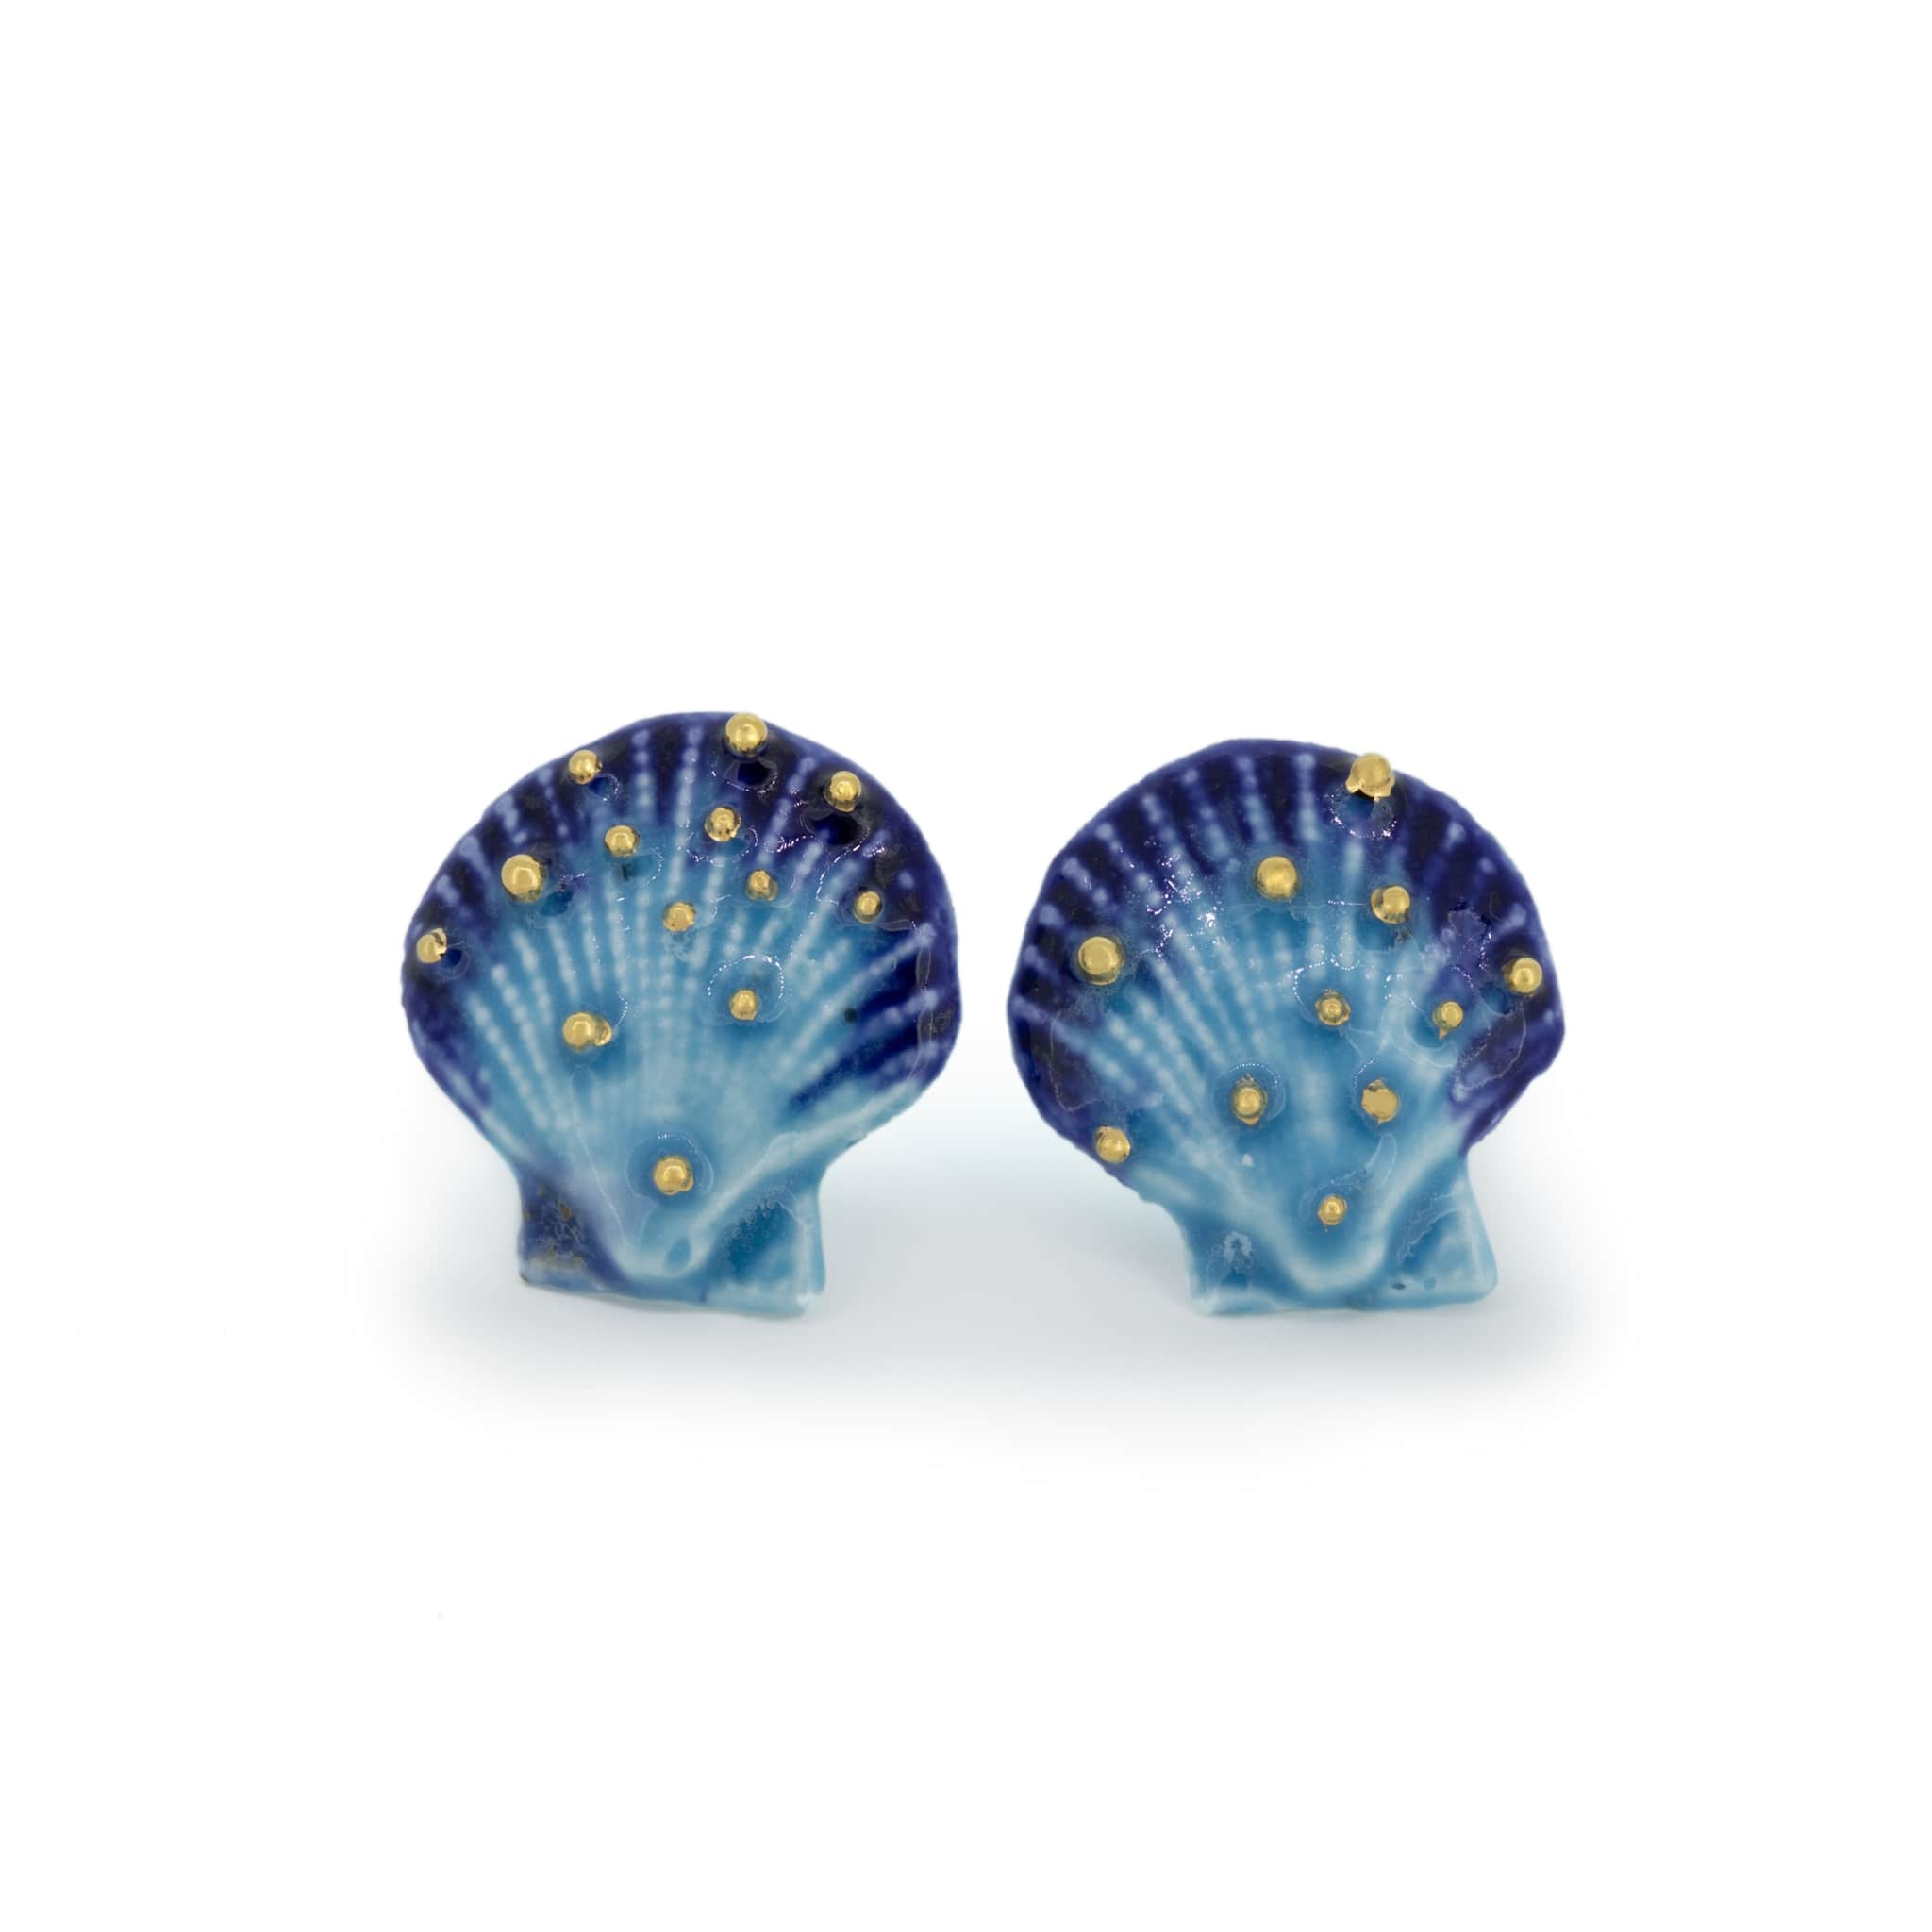 Mermaid Big Seashell Stud Earrings